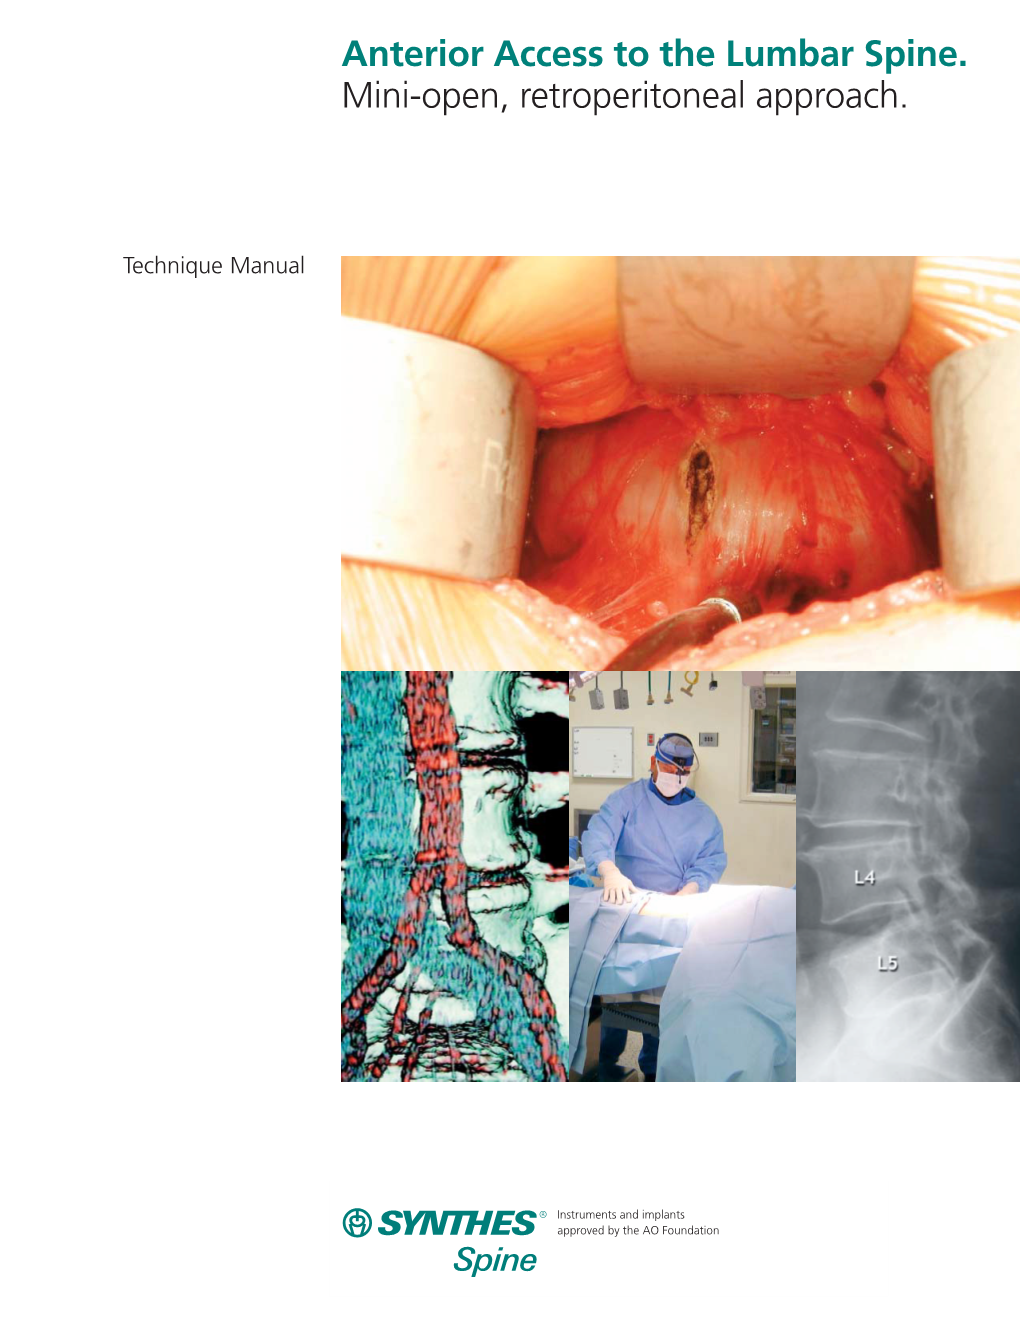 Anterior Access to the Lumbar Spine. Mini-Open, Retroperitoneal Approach